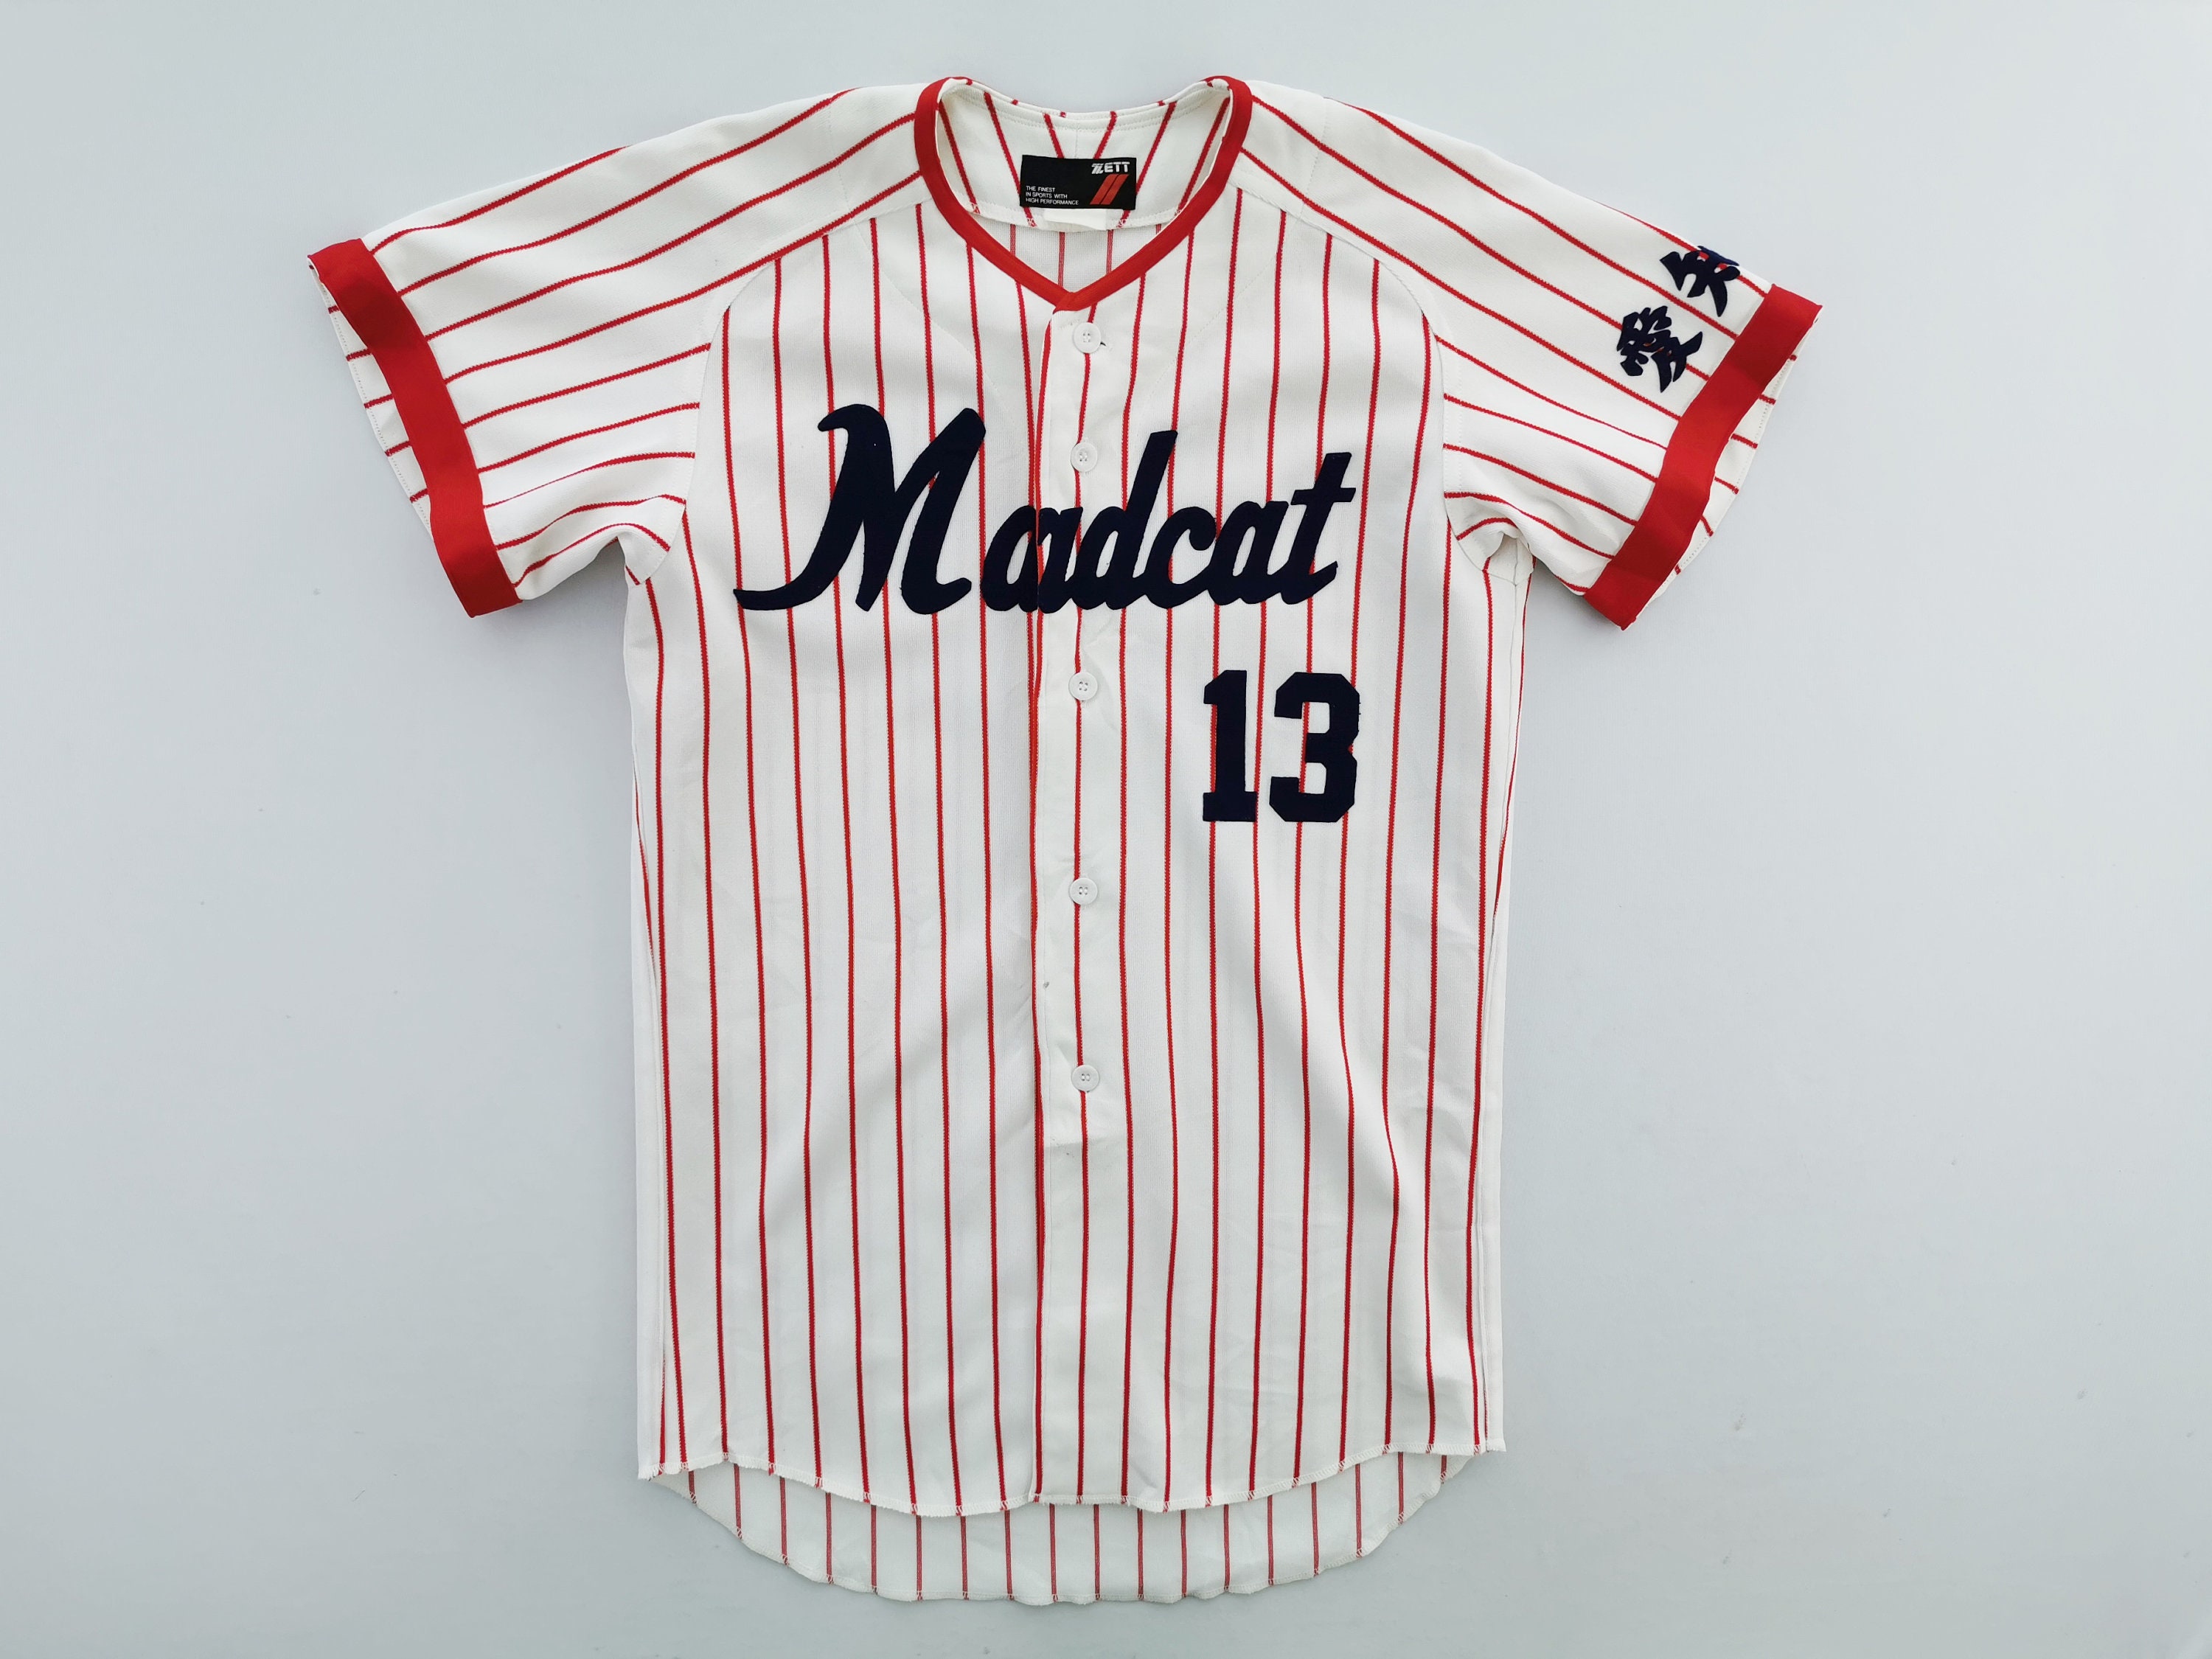  Shohei Ohtani 16 Japan Samurai Black Pinstriped Baseball Jersey  Stitch Novelty Item : Sports & Outdoors